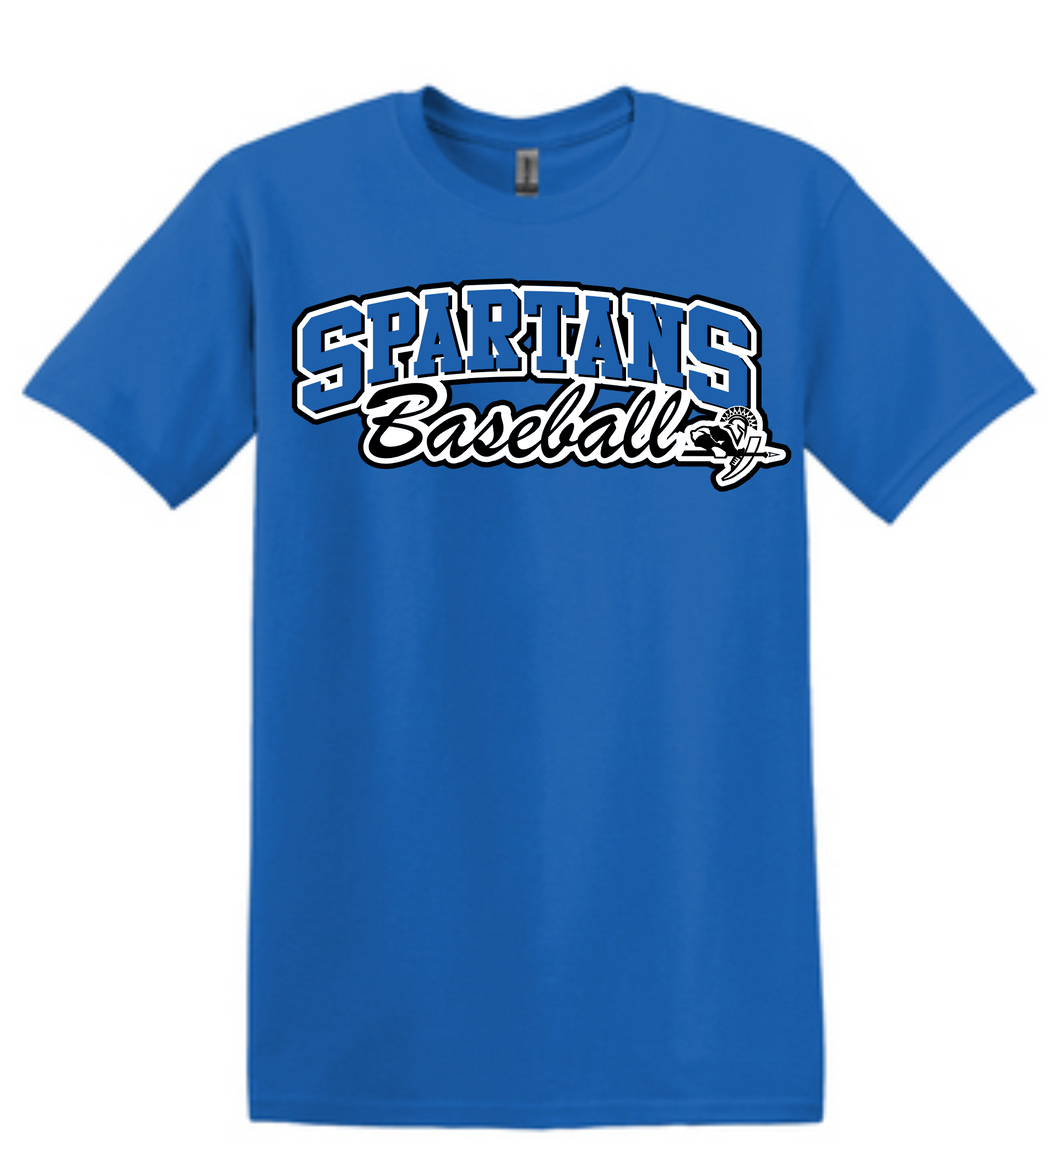 West McDowell Baseball Short Sleeve Shirt